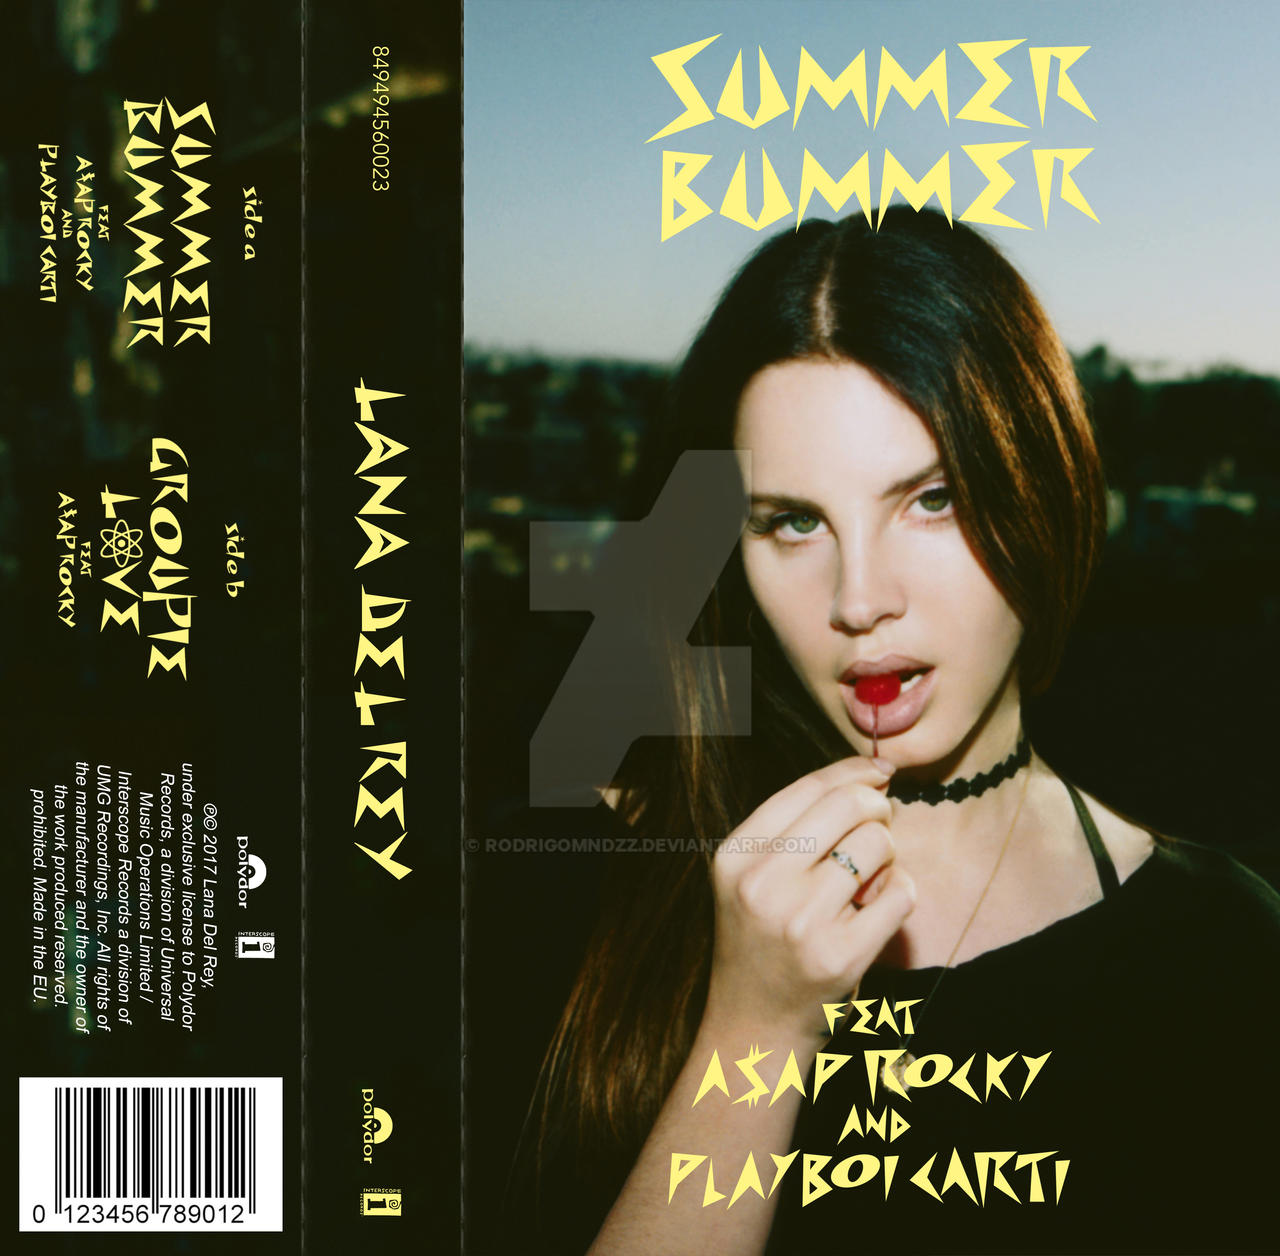 LDR - Summer Bummer/Groupie Love  Cassette Cover by rodrigomndzz on  DeviantArt